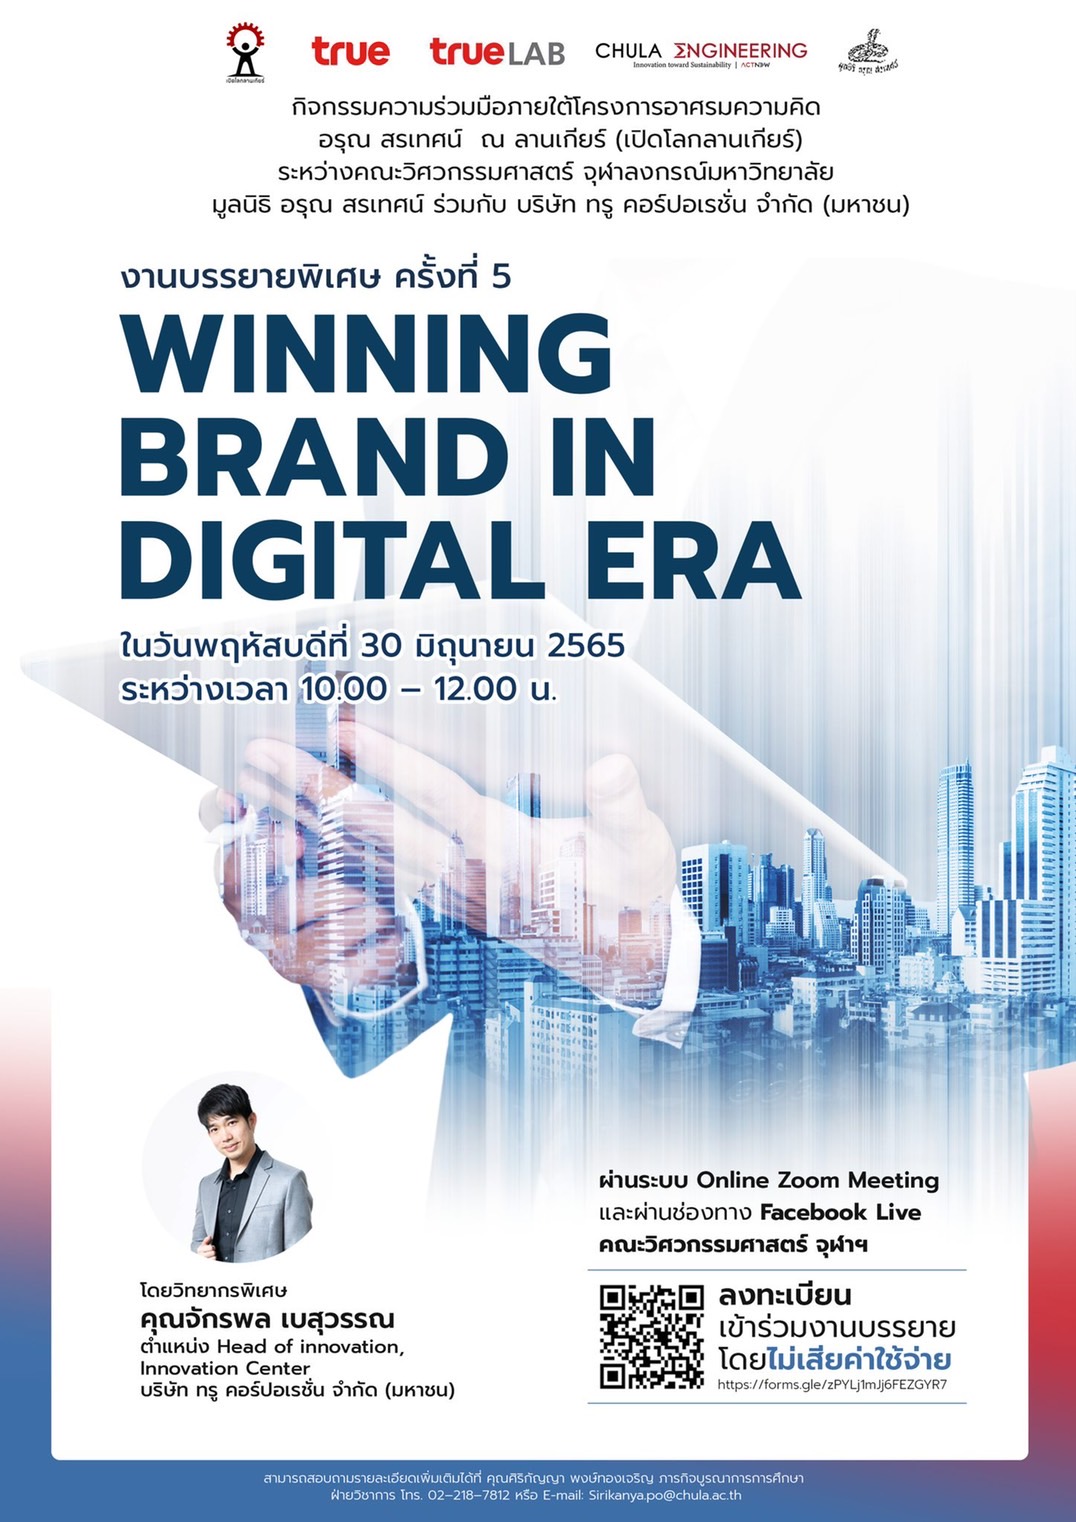 Winning brand in digital era